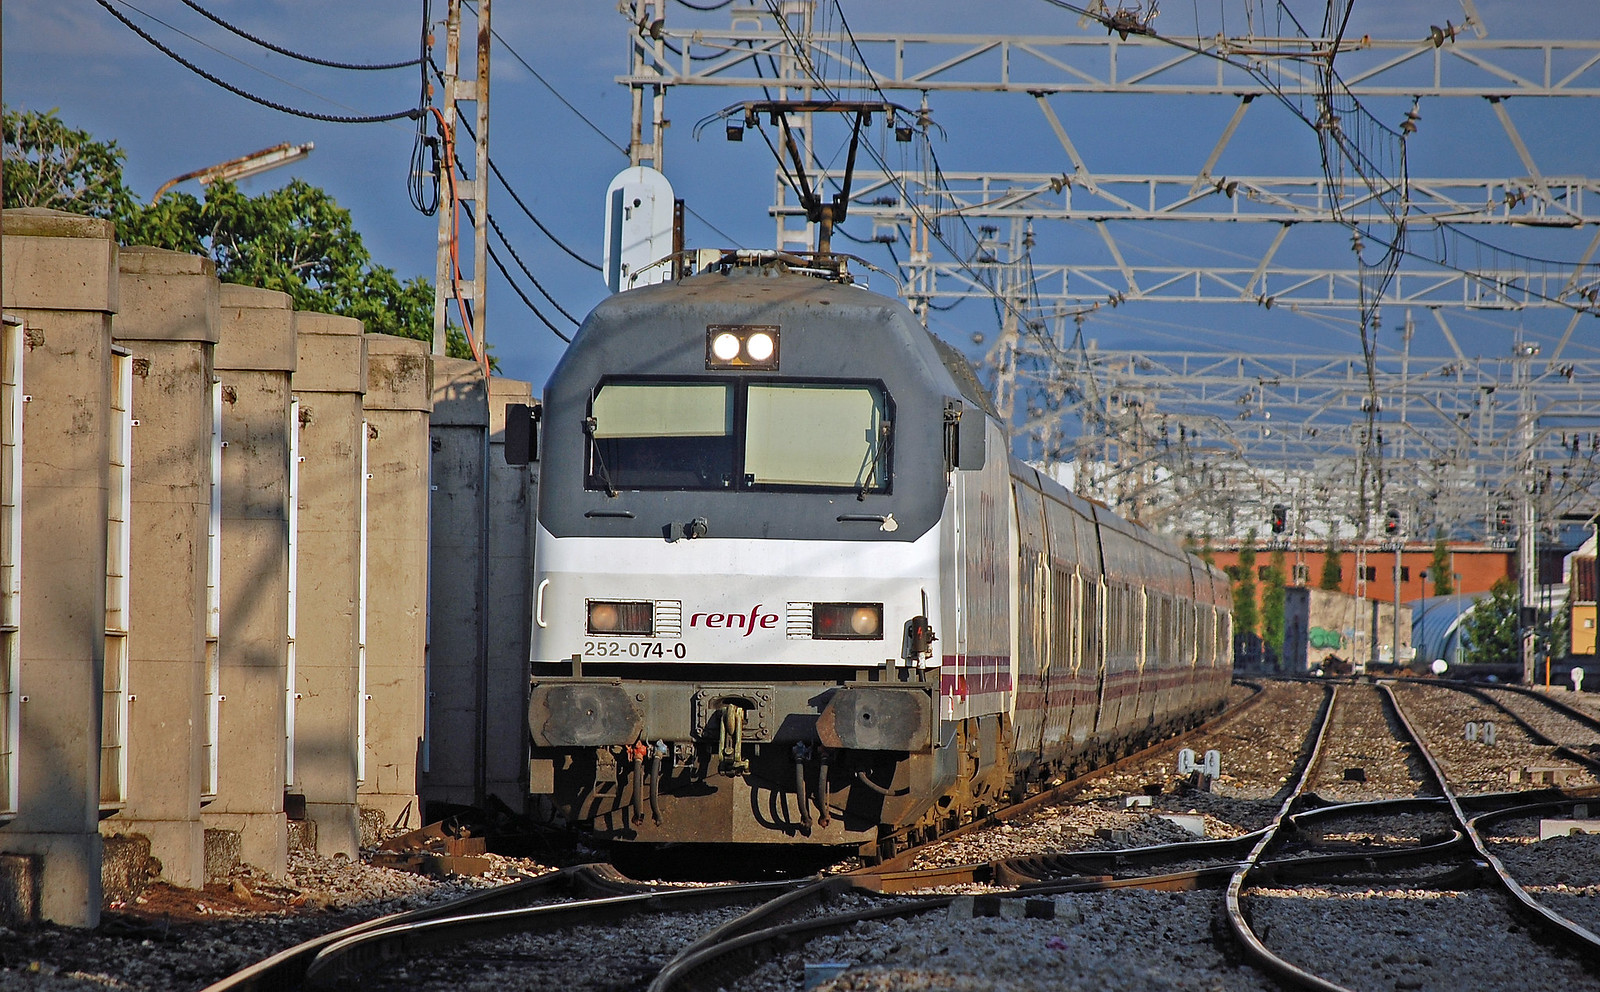 Trenhotel at Tarragona